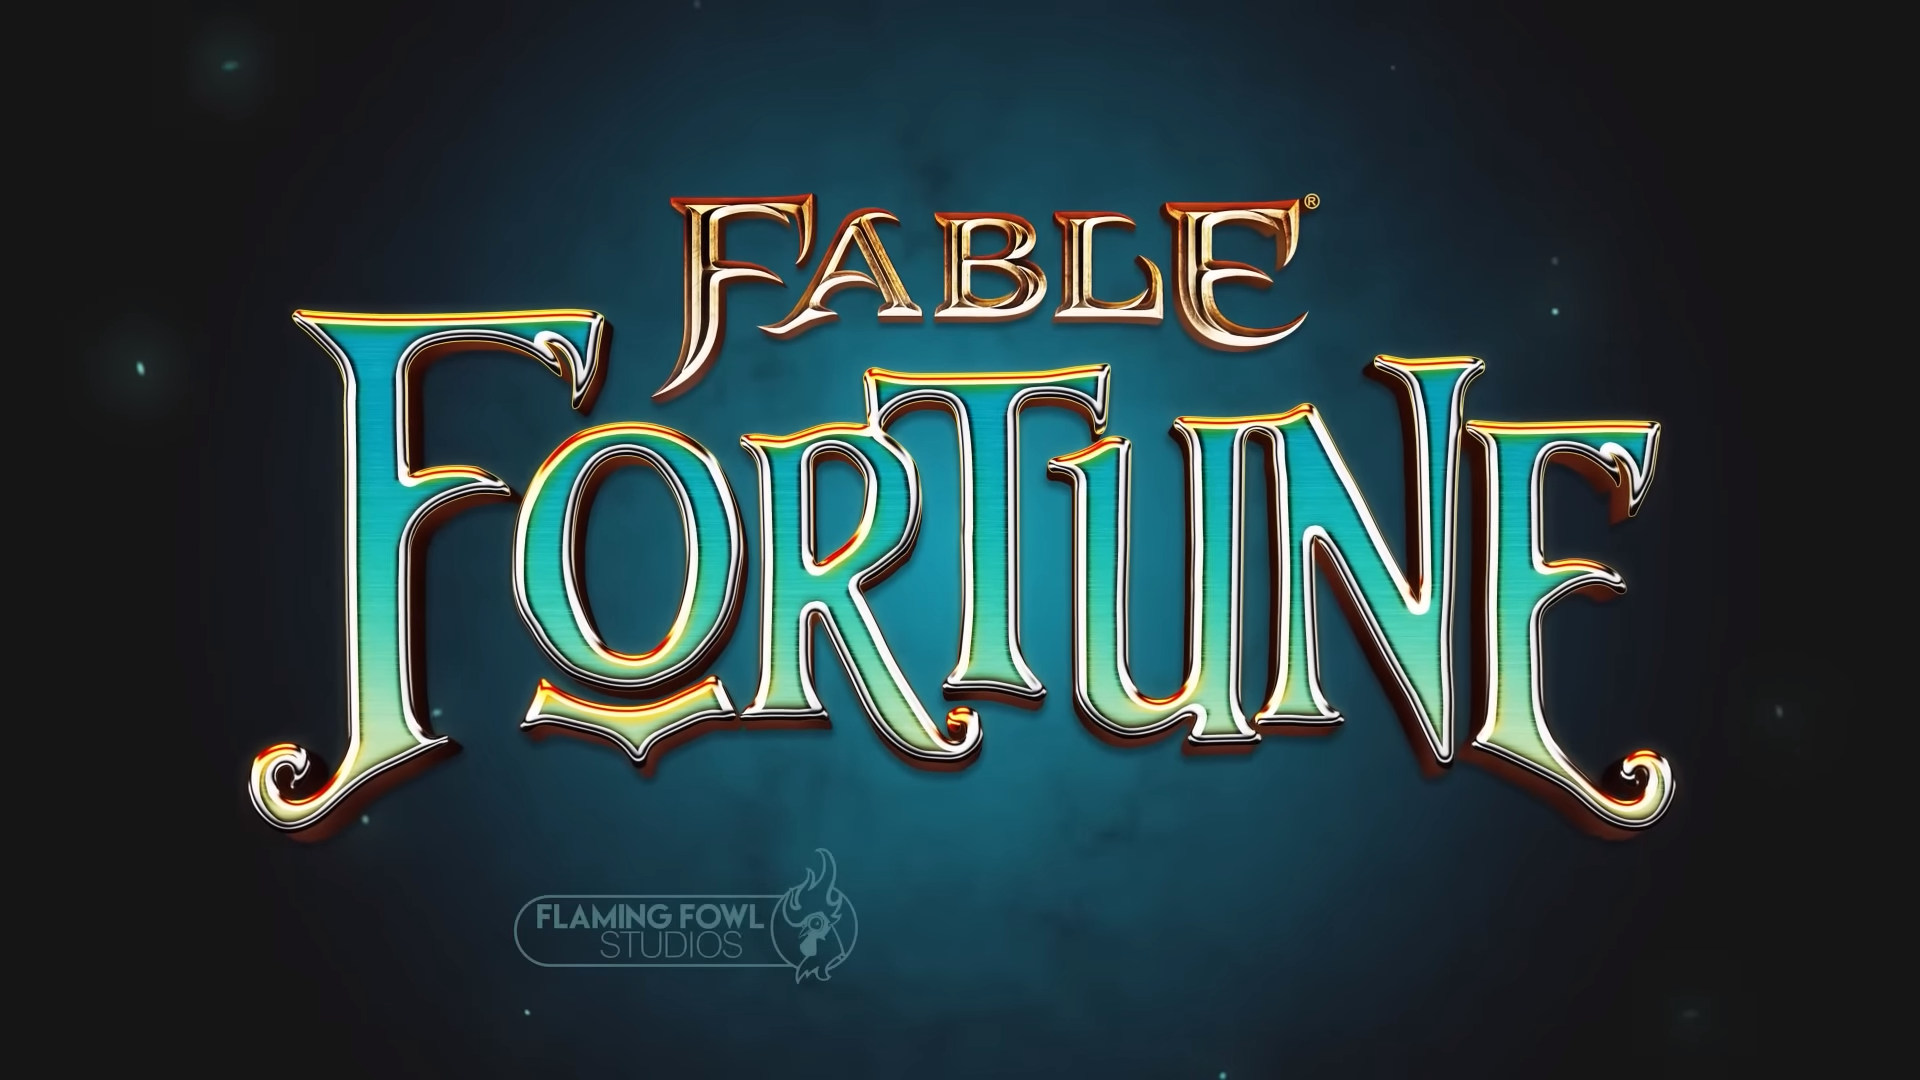 Fable Fortune официально закрылась